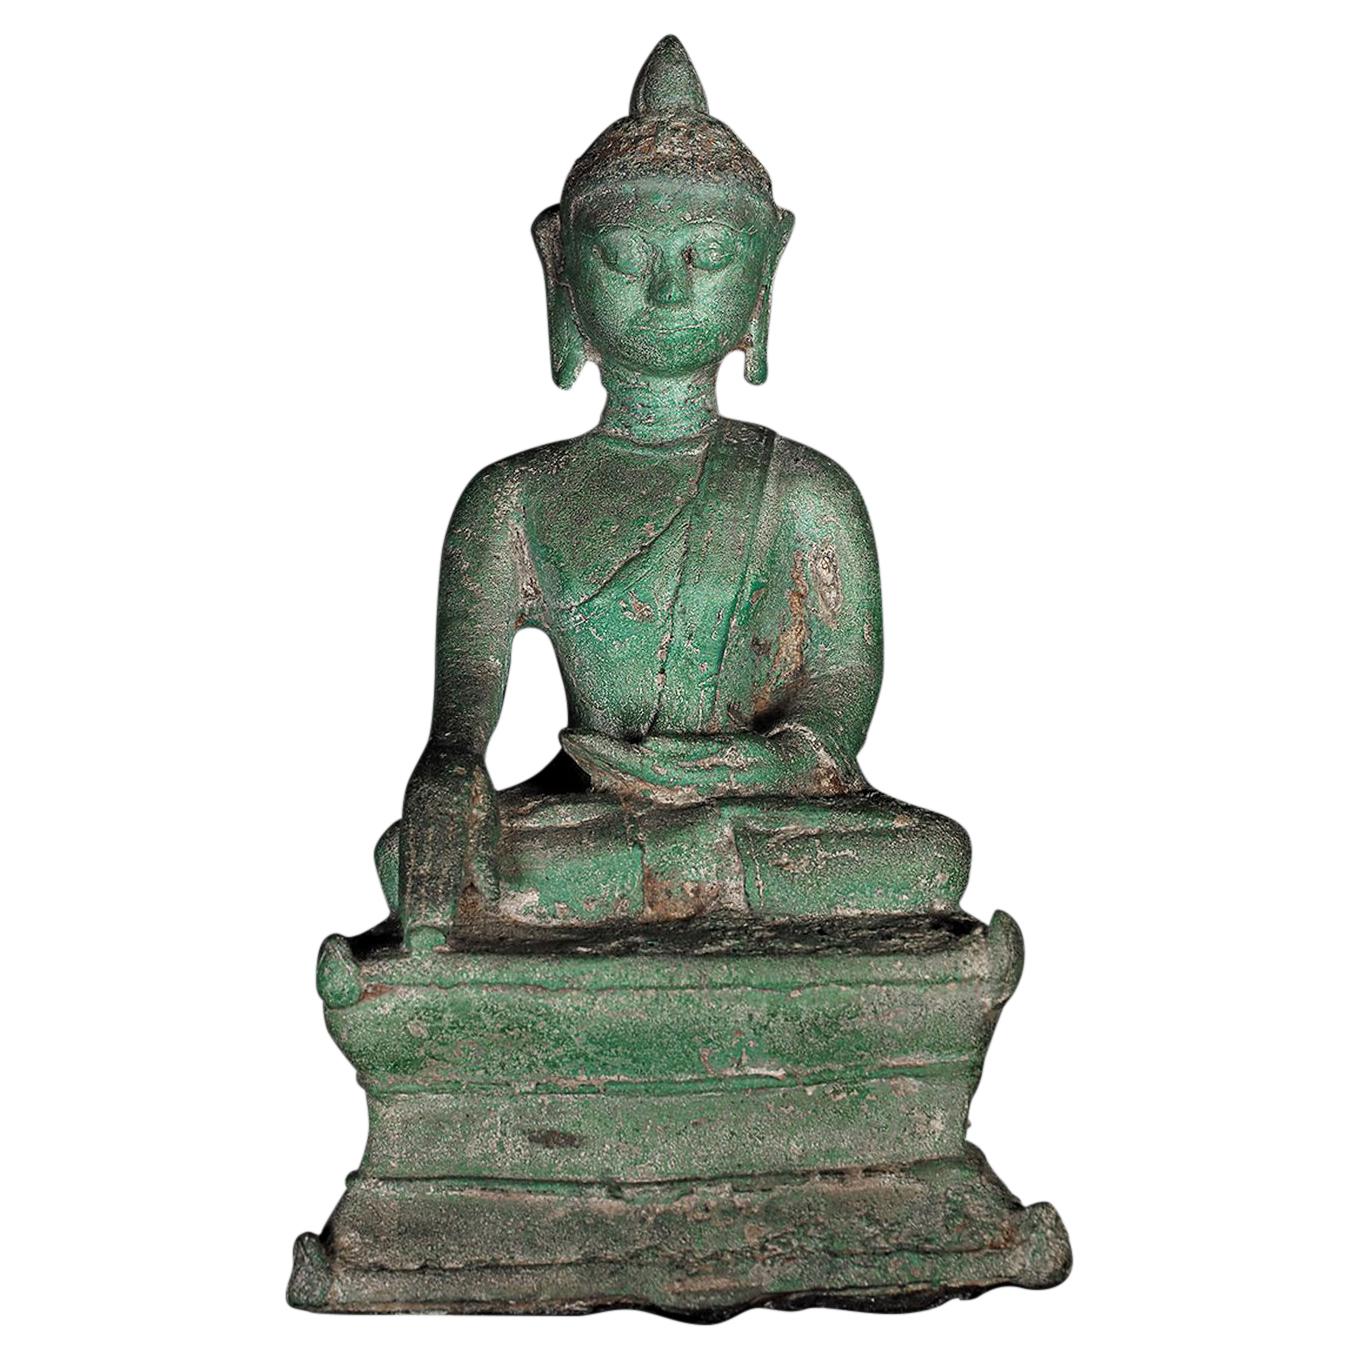  11. Jh. Bronze Buddha- Pyu/Pagan Burma Seltene, mächtige Antike- TL Test! - 8439 im Angebot